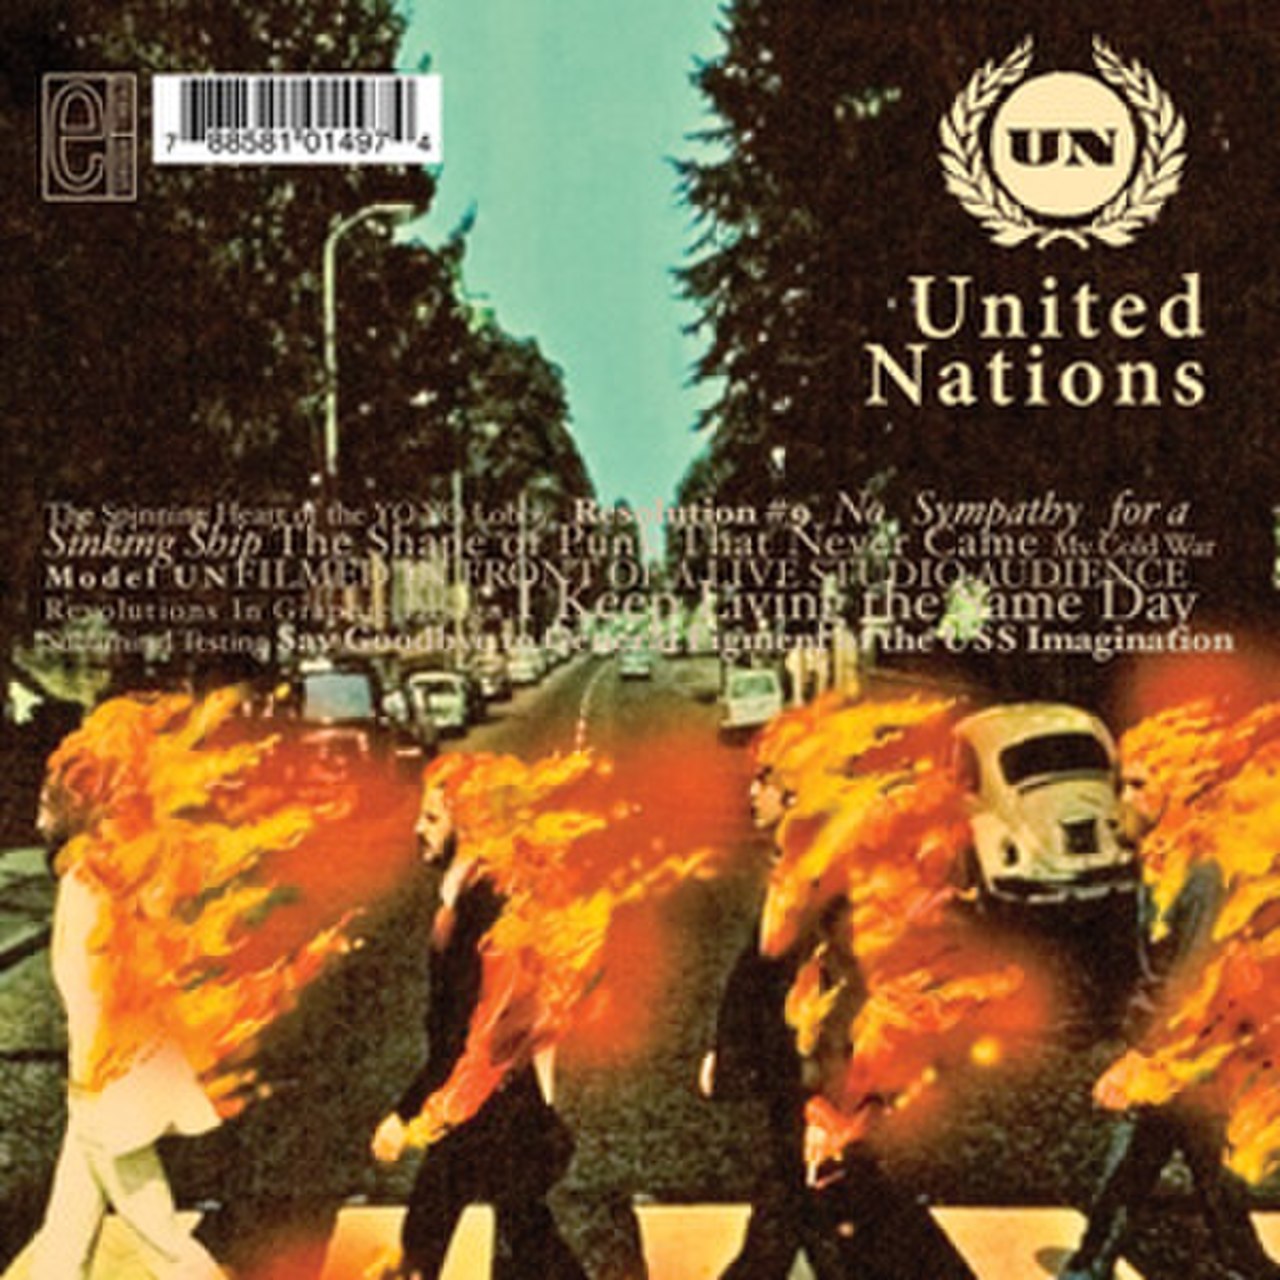 ST / United Nations